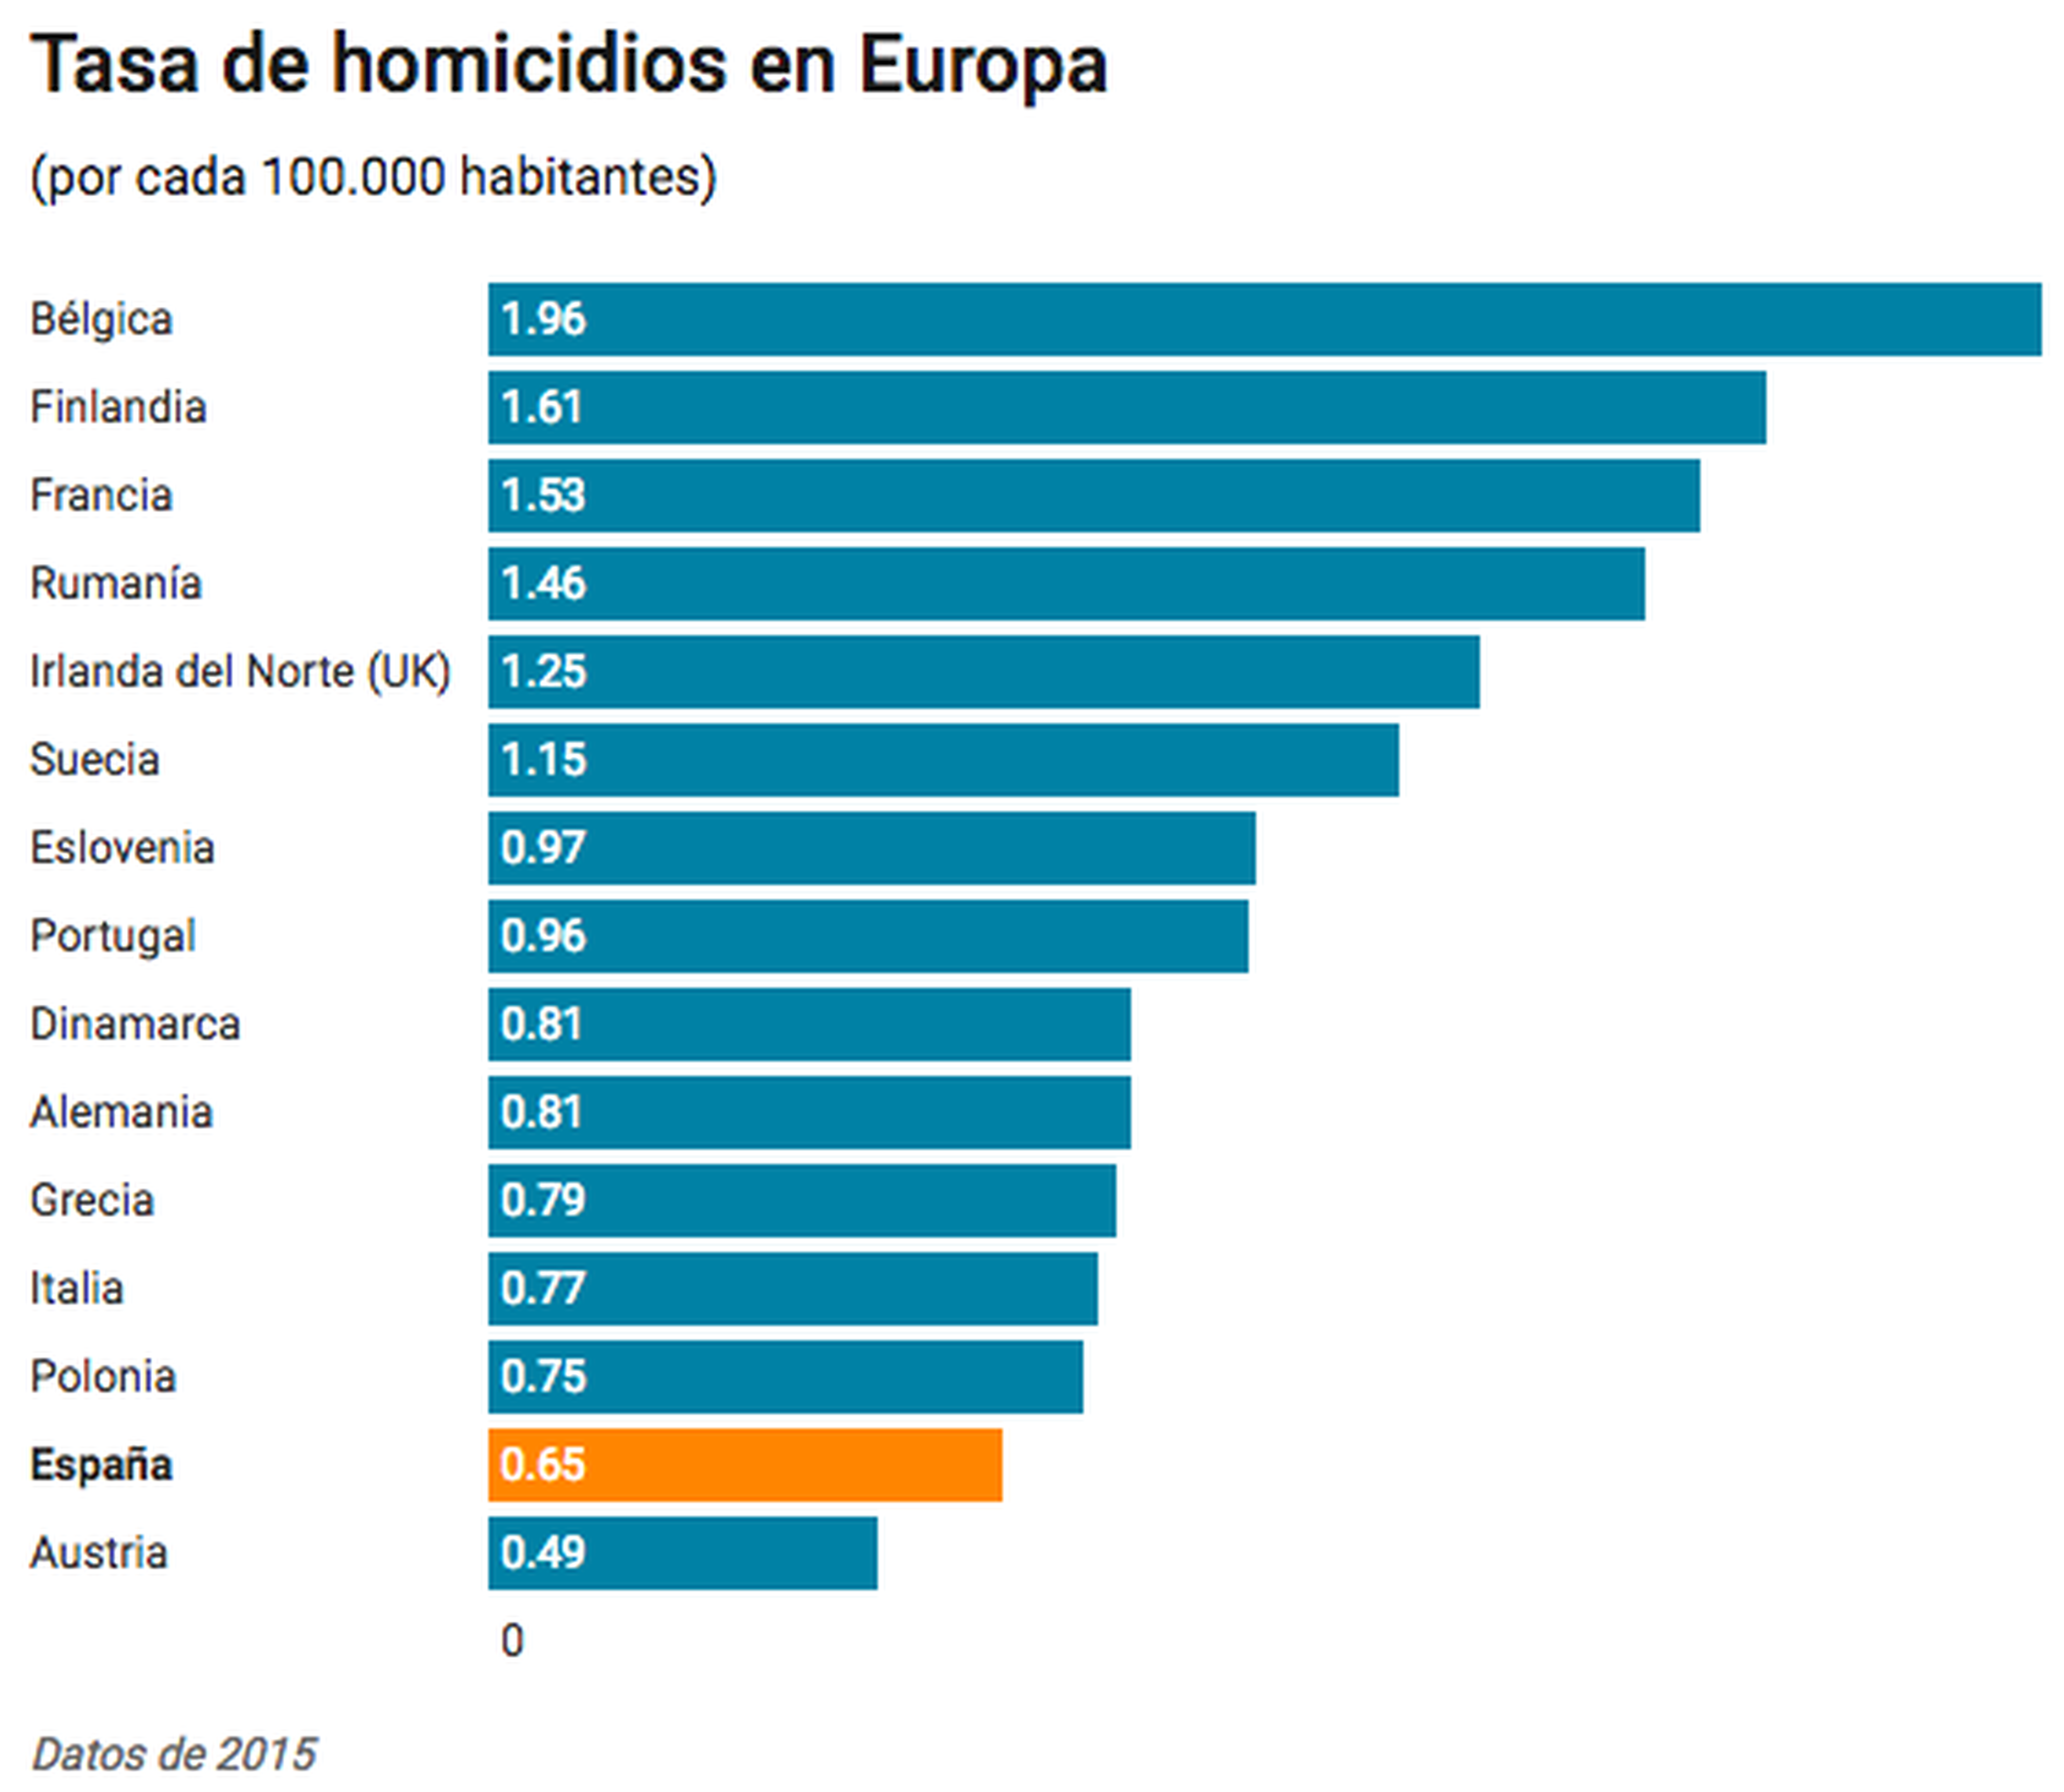 Tasa de homicidios en Europa. Datos de 2015.